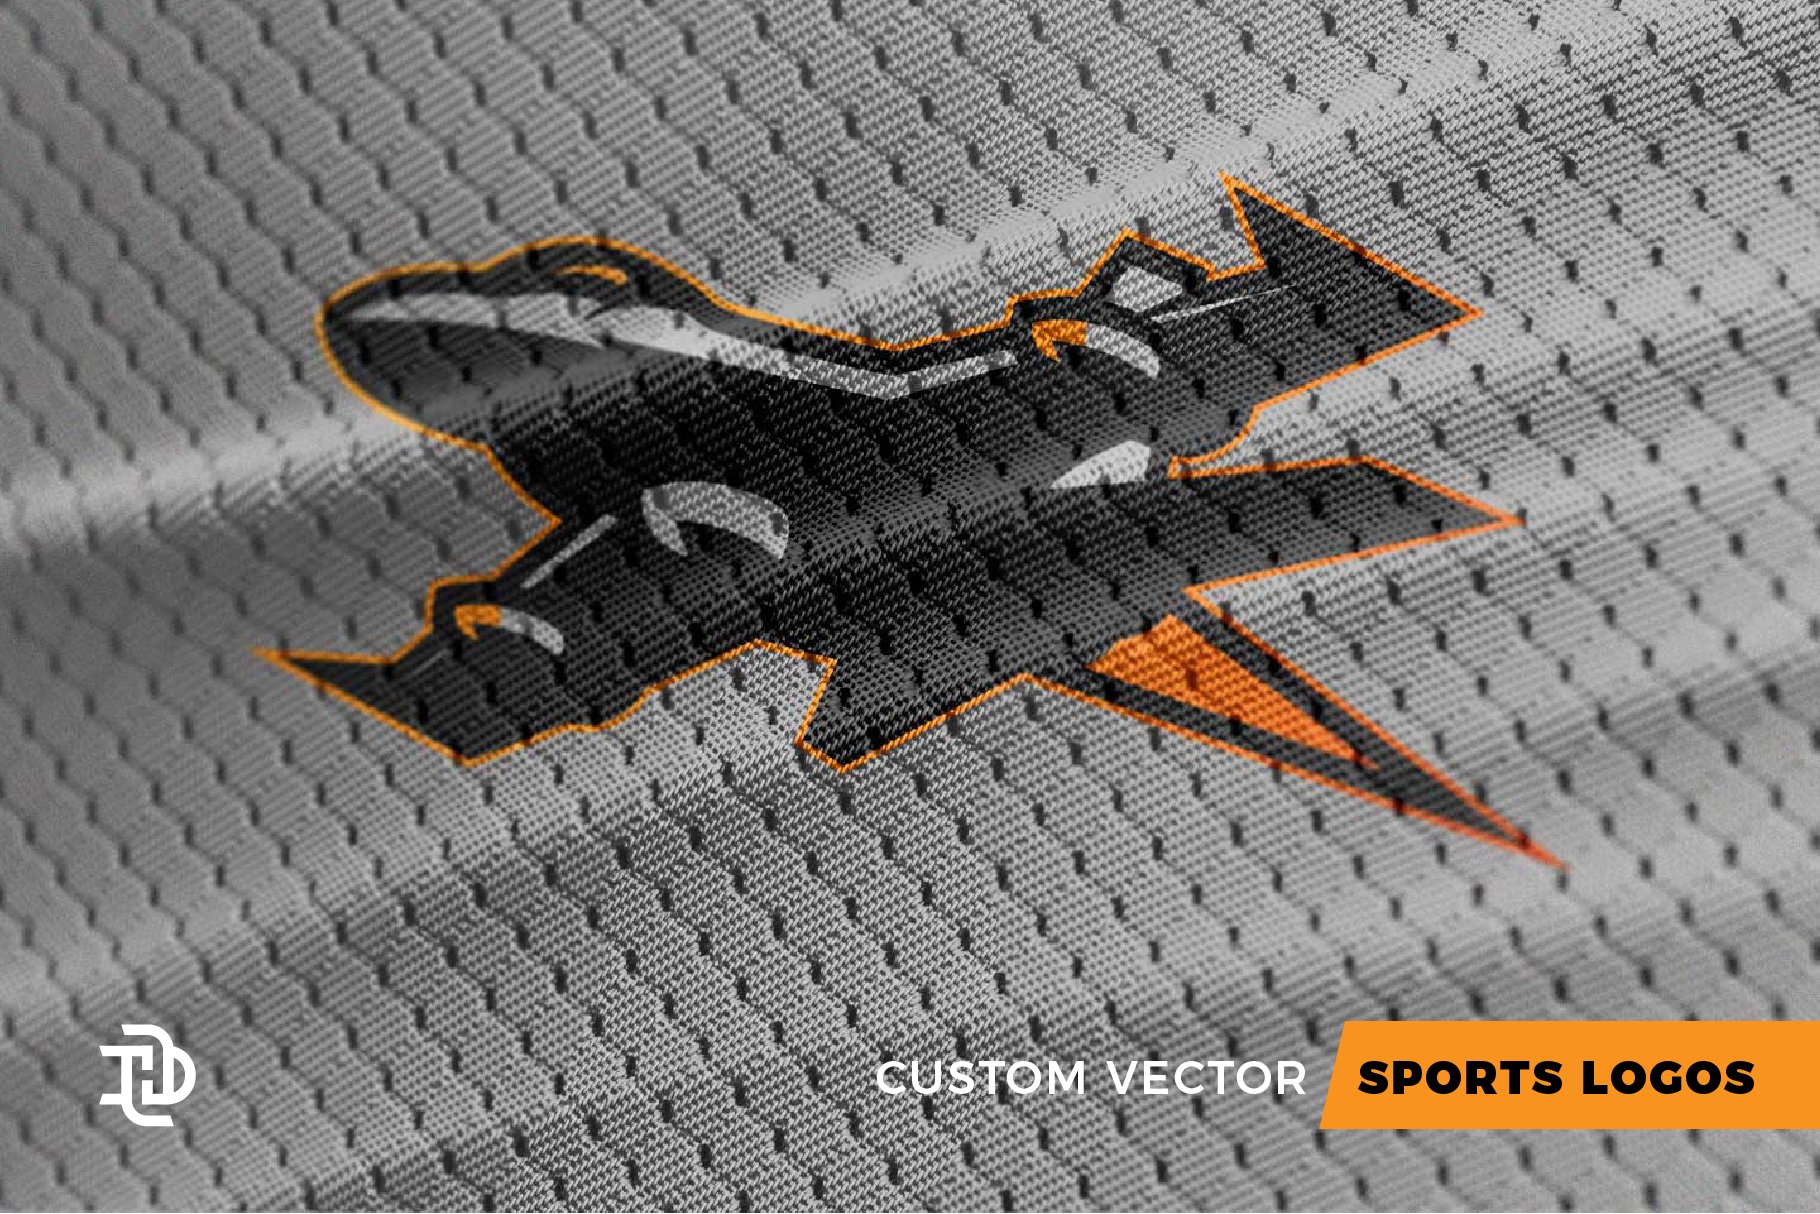 Jets | Custom Sports Logo cover image.